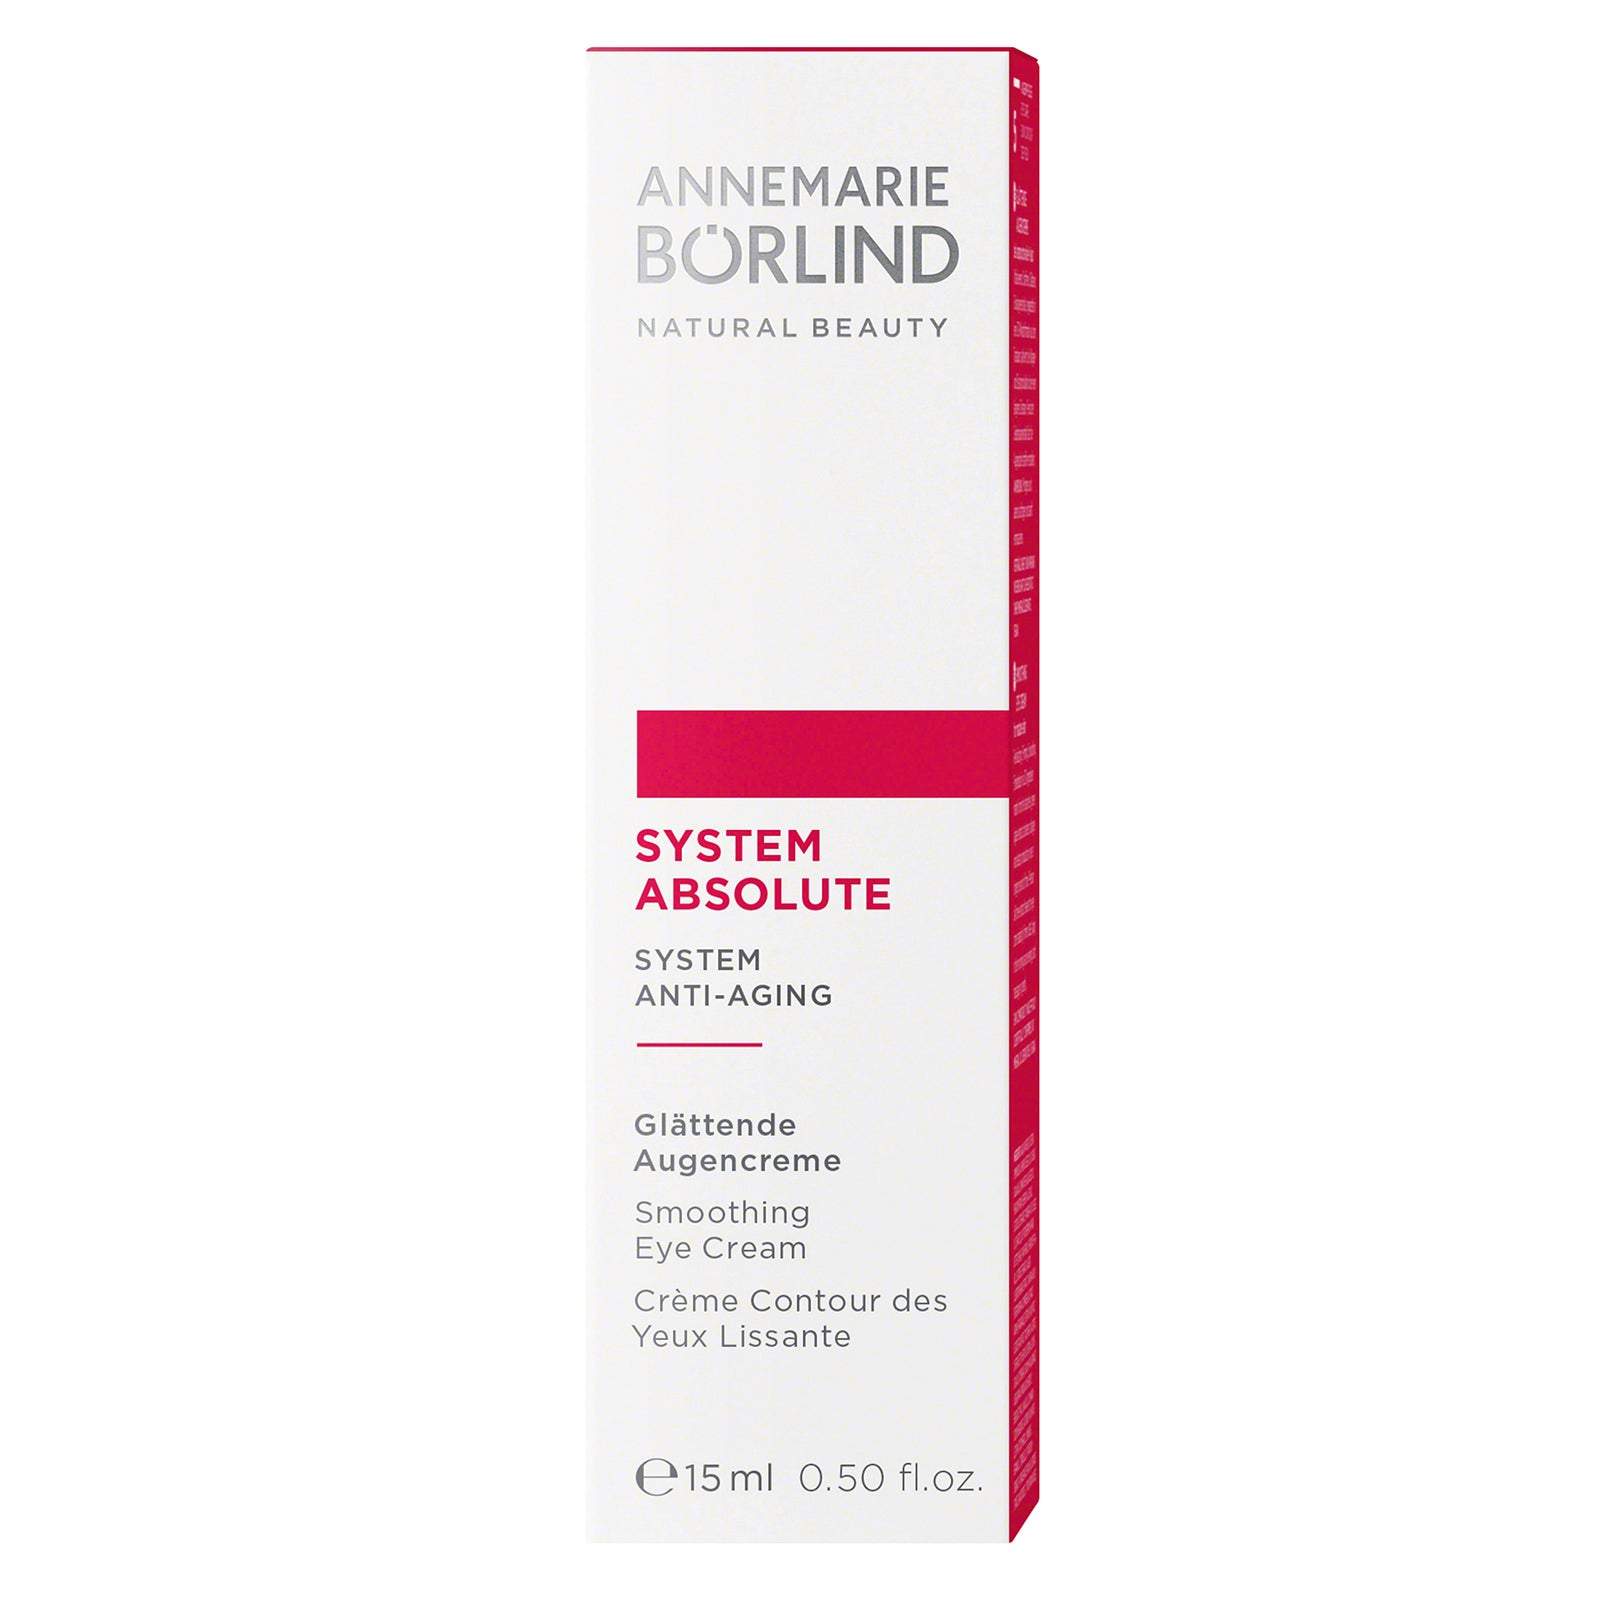 ANNEMARIE B?RLIND -  SYSTEM ABSOLUTE Anti-Aging Smoothing Eye Cream 15 ml 0.50 fl. oz.